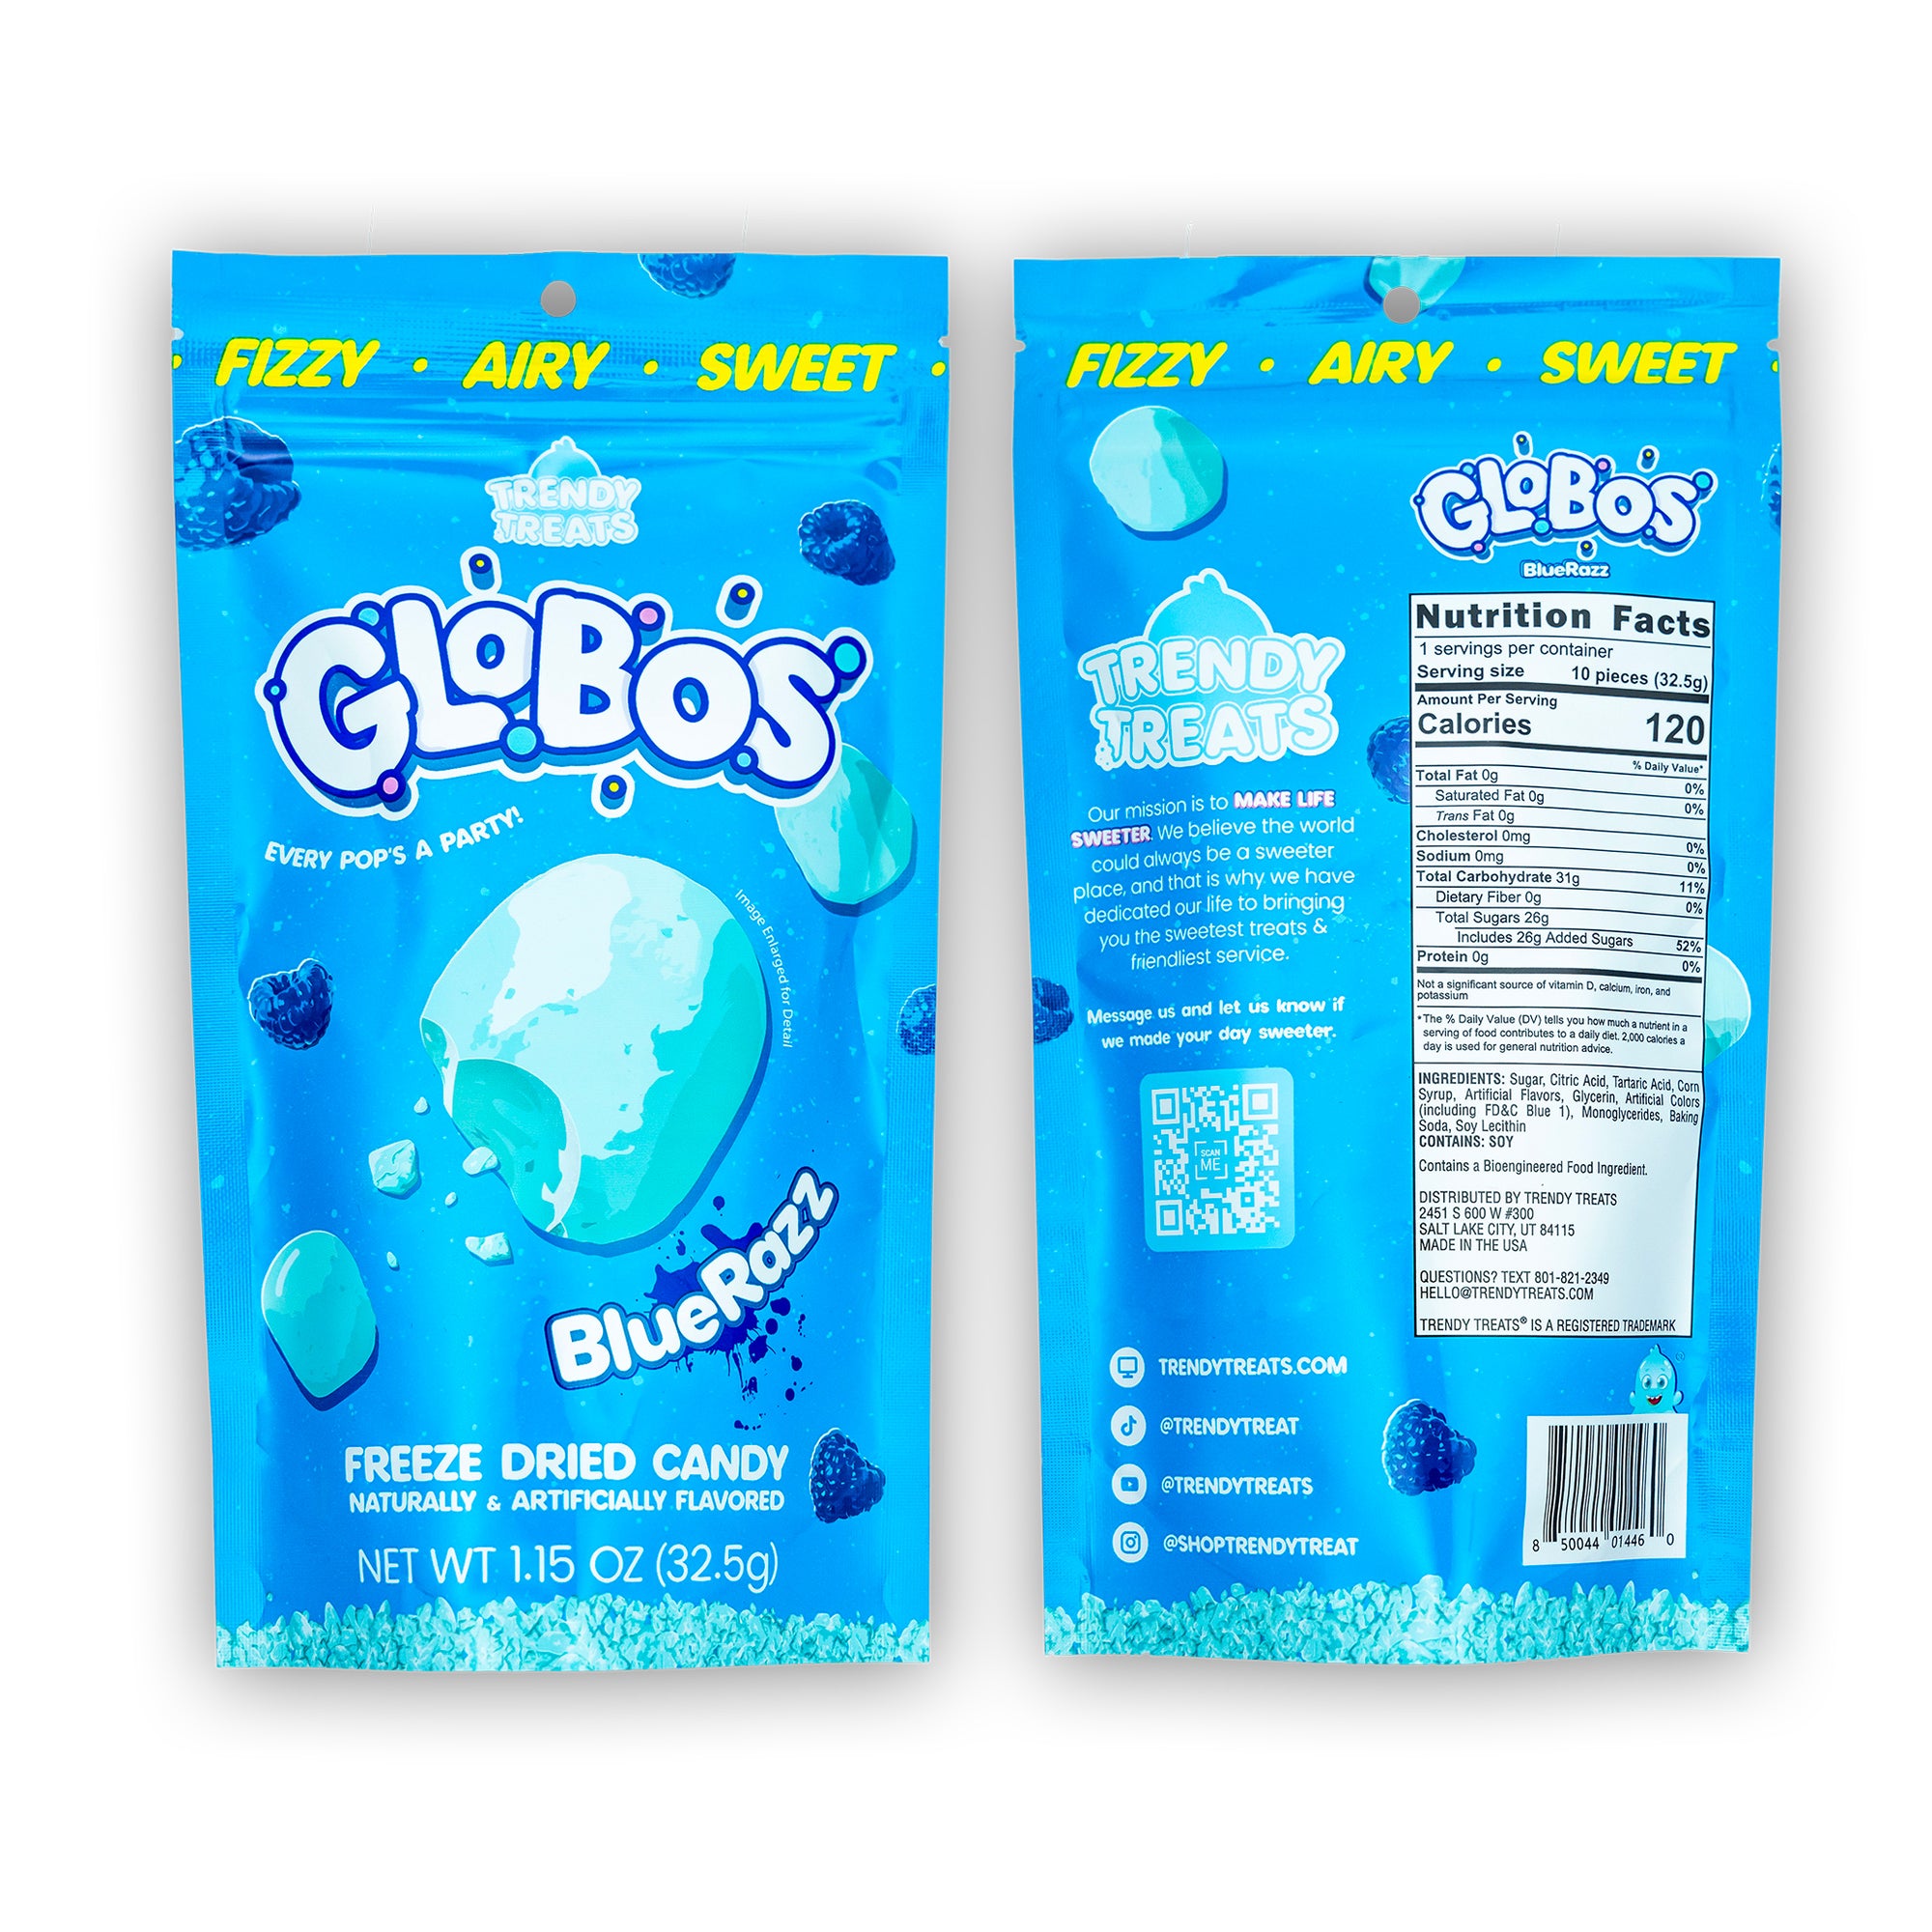 Globos Freeze Dried Candy